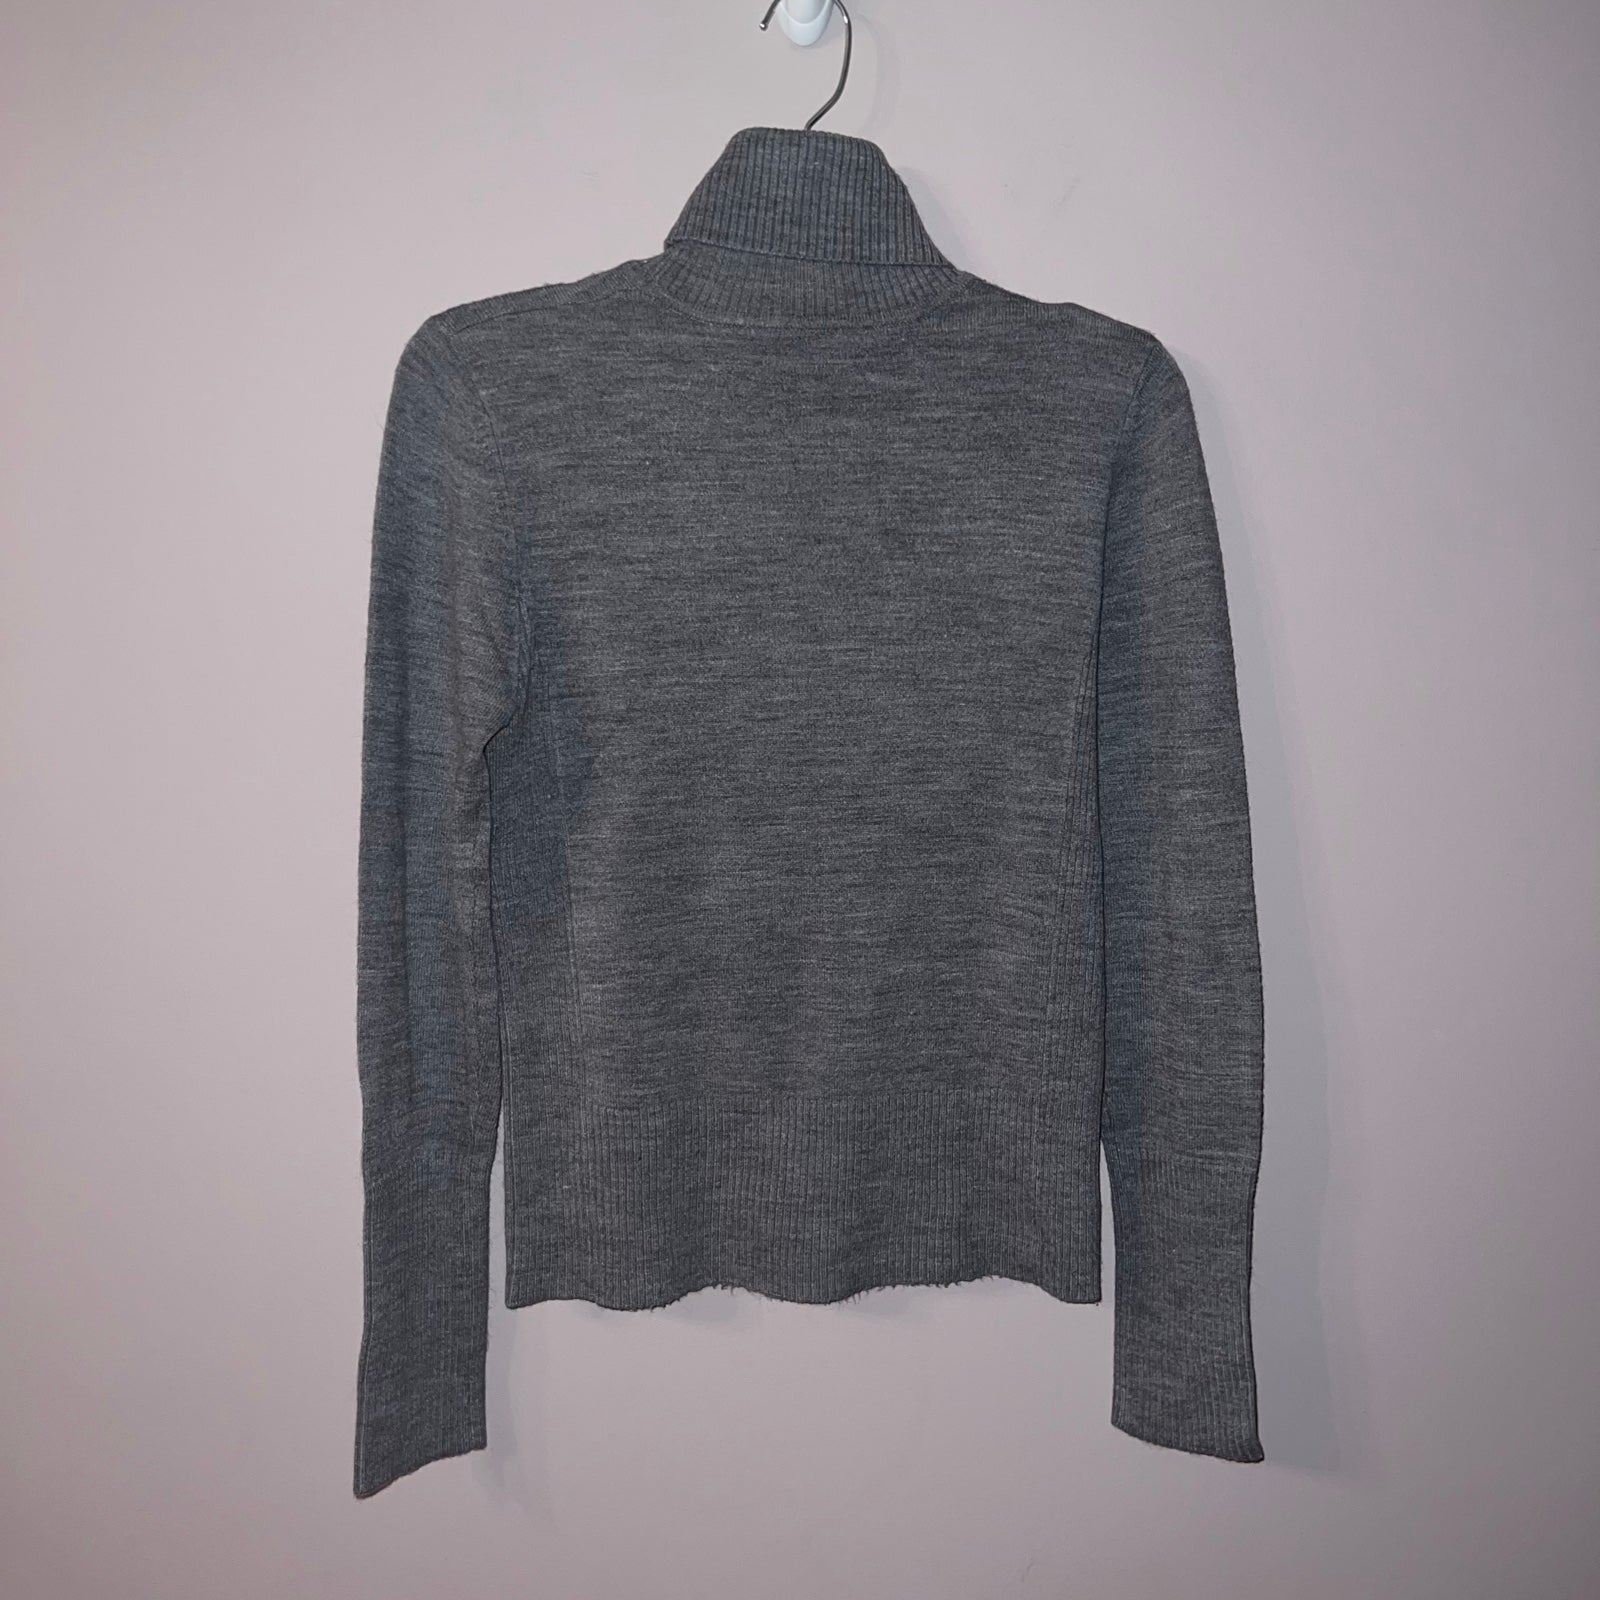 Stylish Grey turtleneck knitted ribbed sweater small OgUCJ3kVj well sale